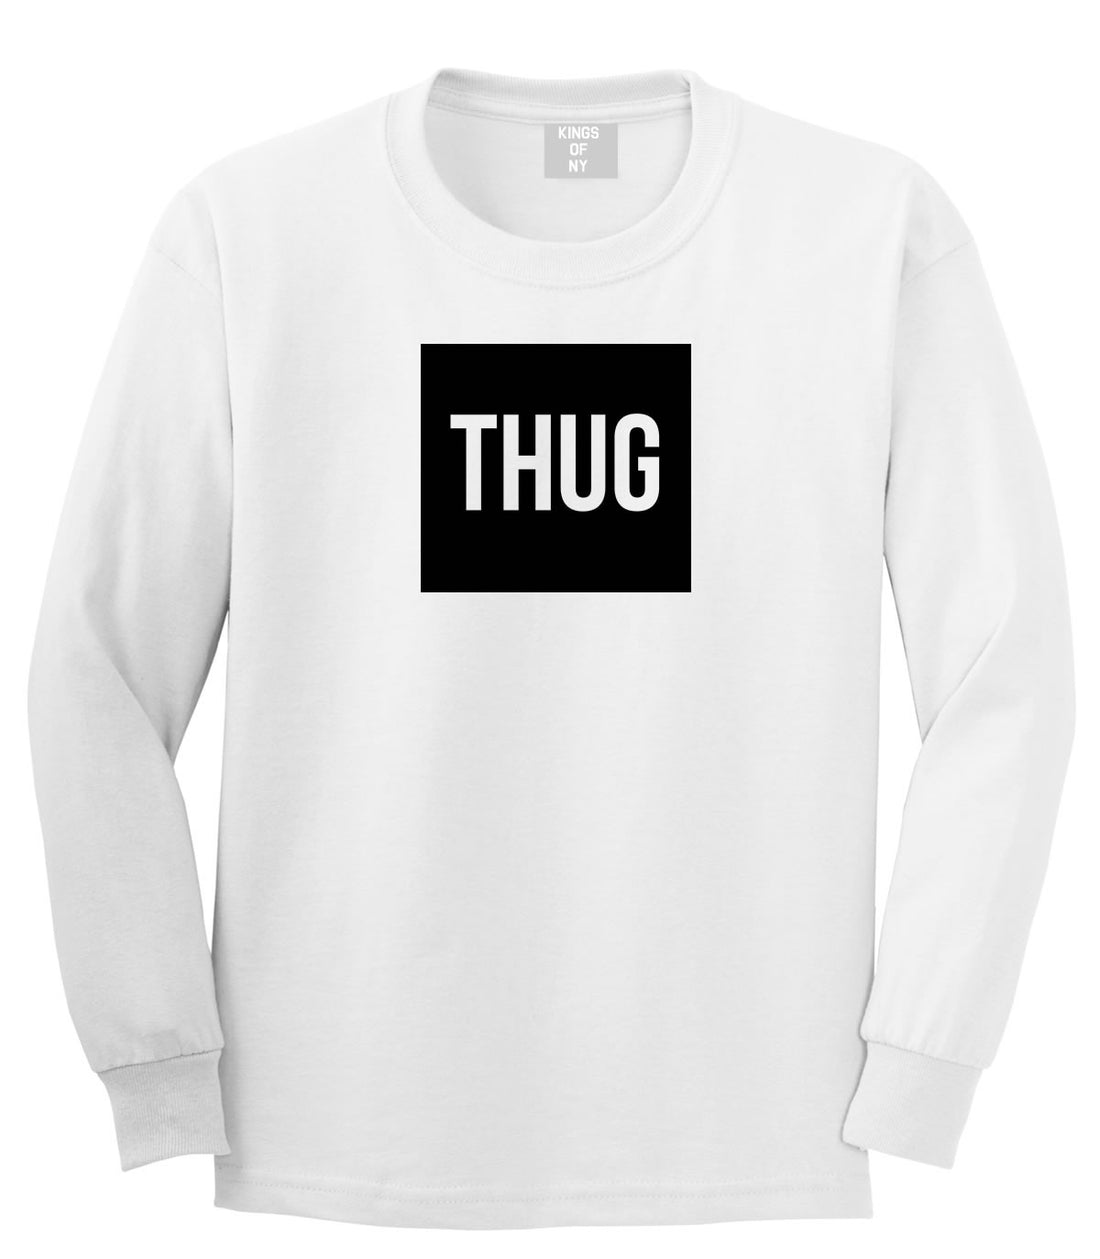 Thug Gangsta Box Logo Boys Kids Long Sleeve T-Shirt in White by Kings Of NY